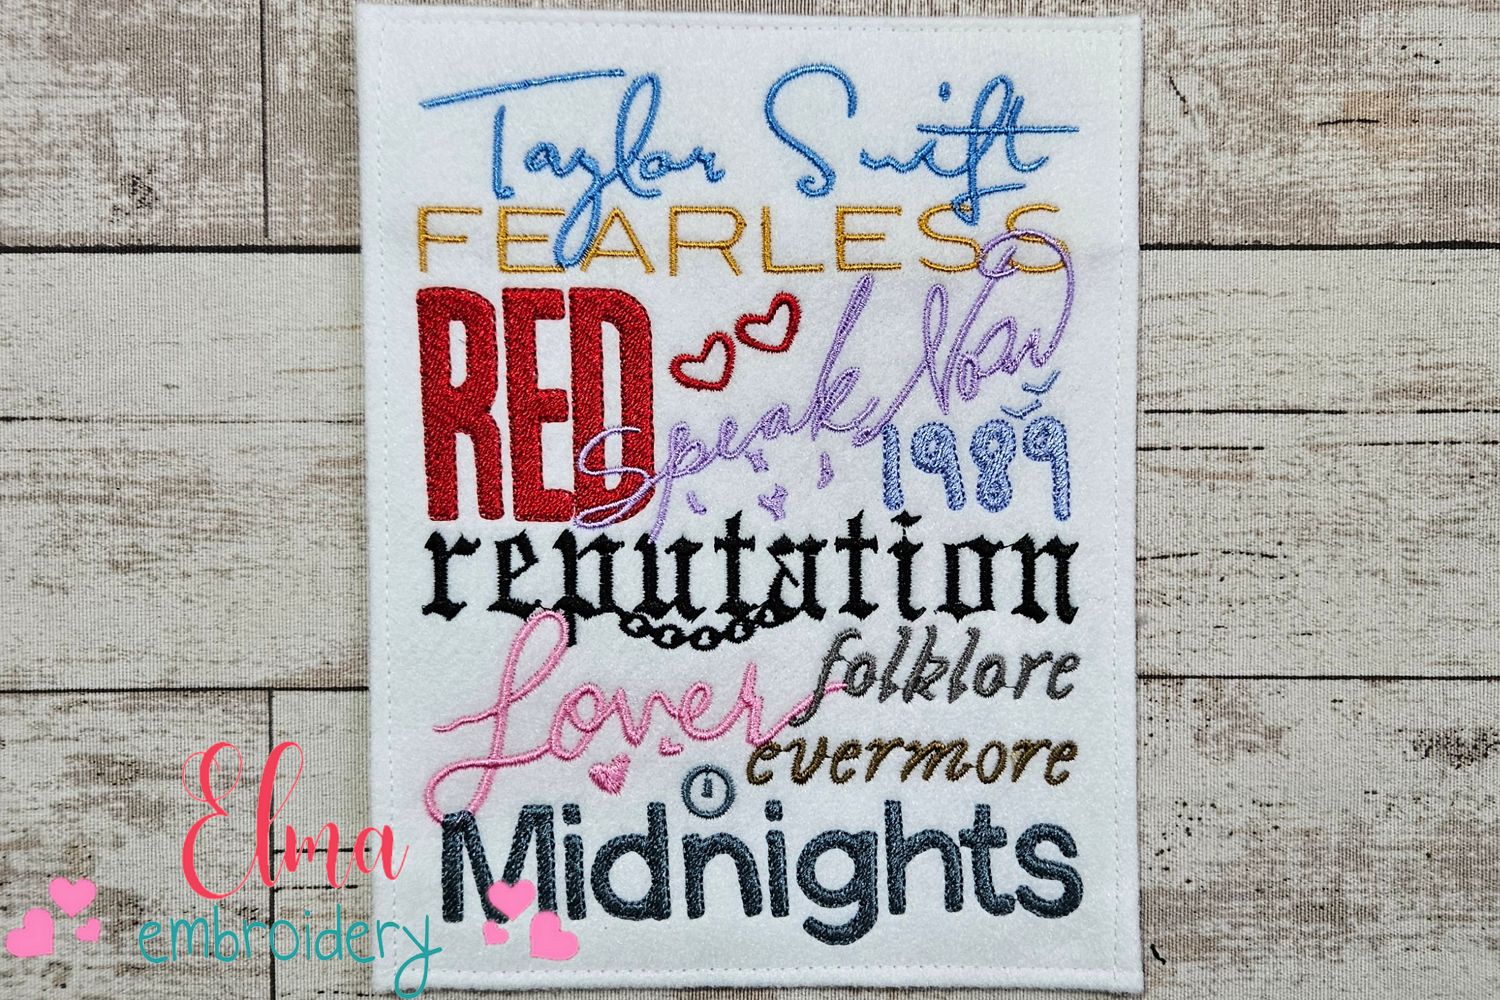 Taylor Swift ERA Tour Reputation Merchandise School Supplies